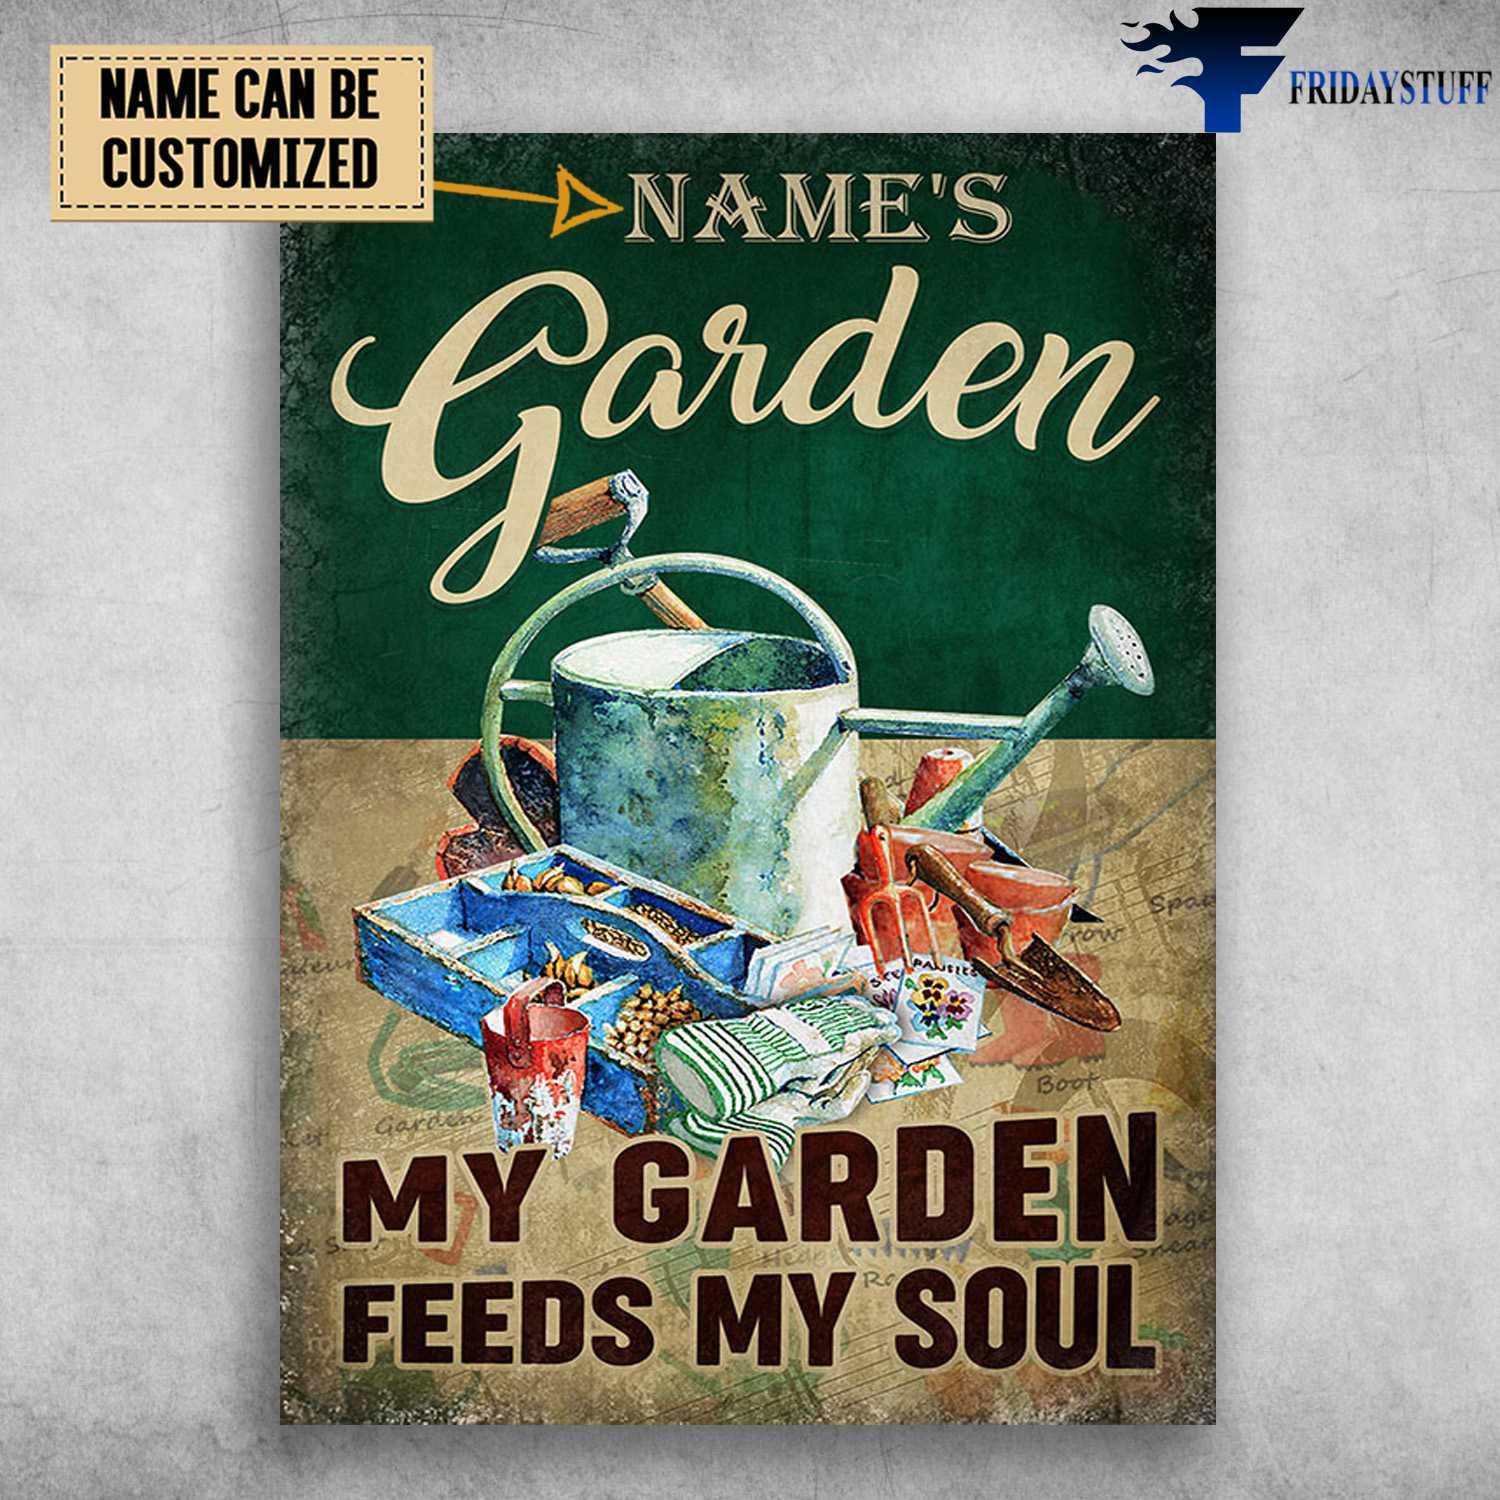 Gardening Poster, My Garden Feeds My Soul, Gardening Tools